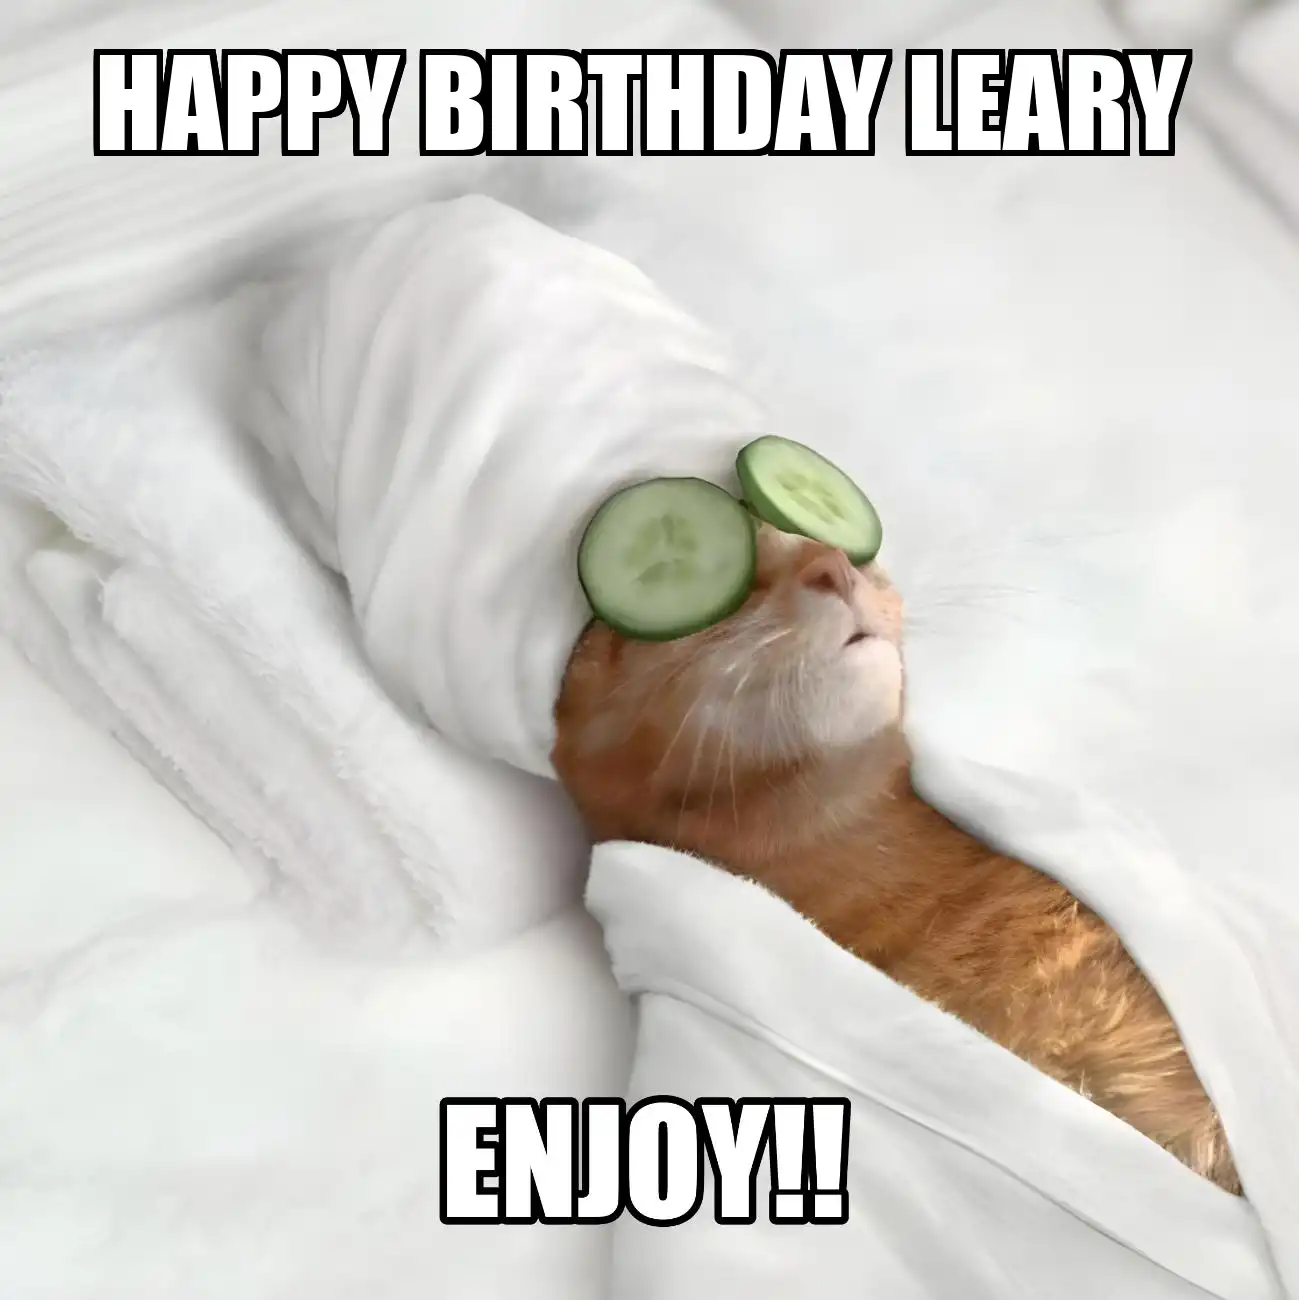 Happy Birthday Leary Enjoy Cat Meme